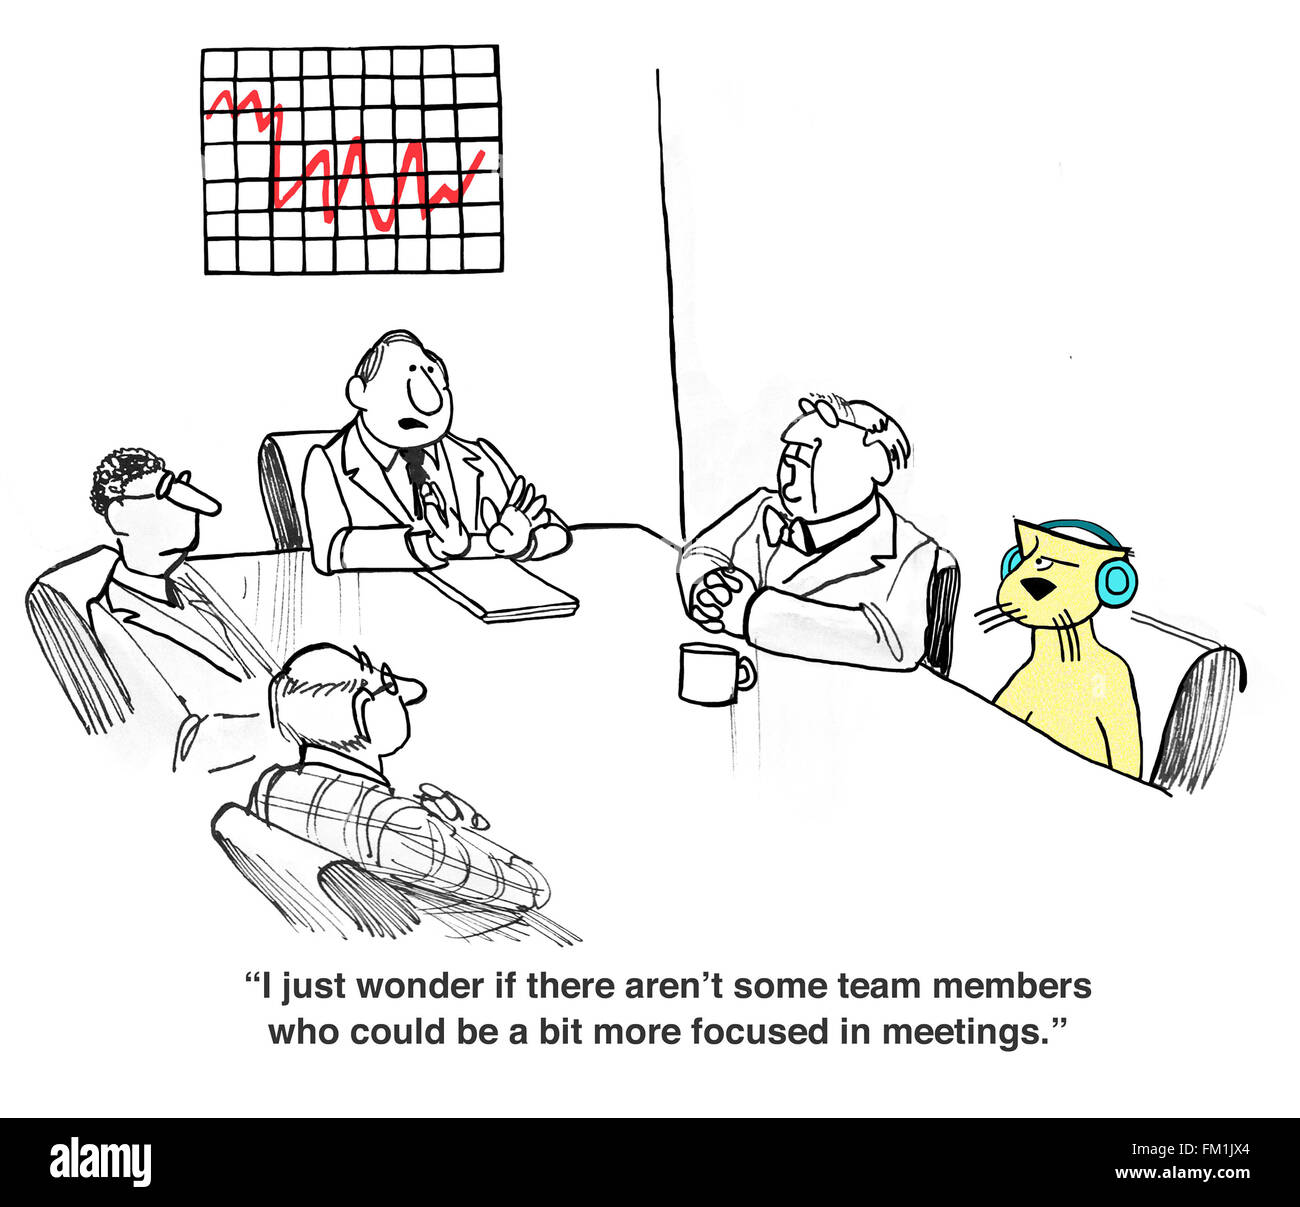 Business cartoon about rude meeting behavior. Stock Photo